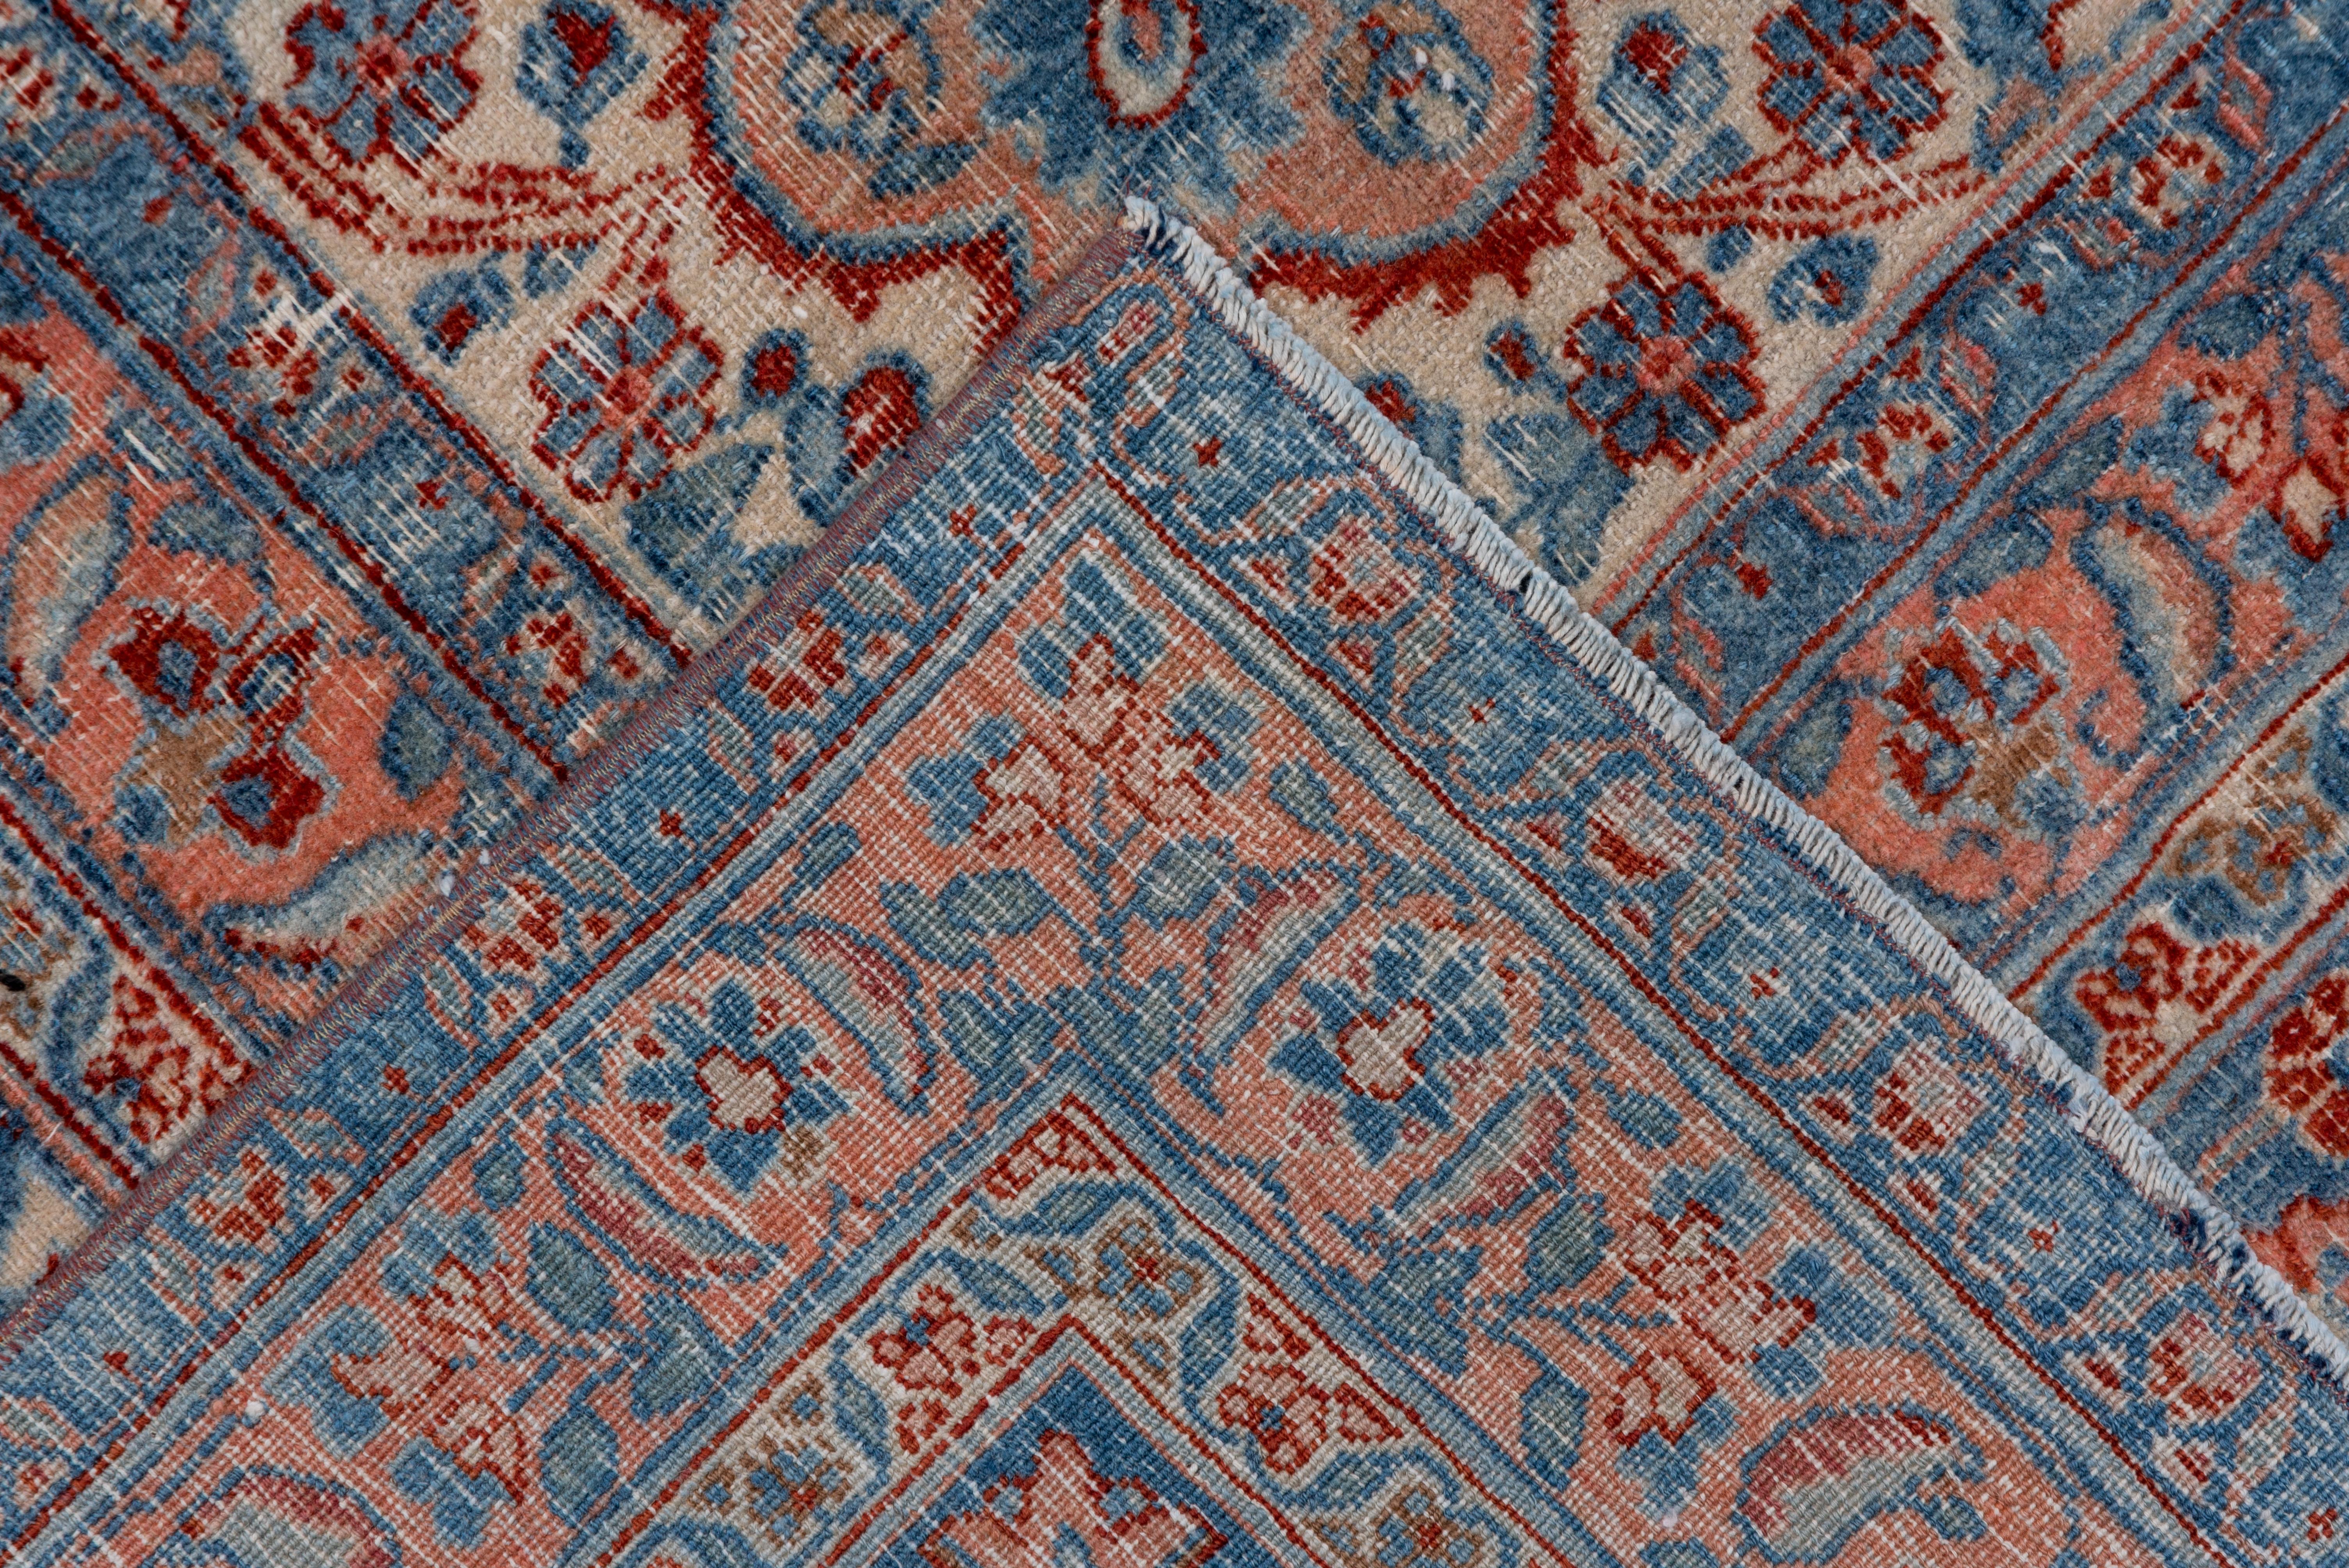 Antique Persian Khorassan Carpet, Blue Tones, Pink Tones, Salmon Tones For Sale 2